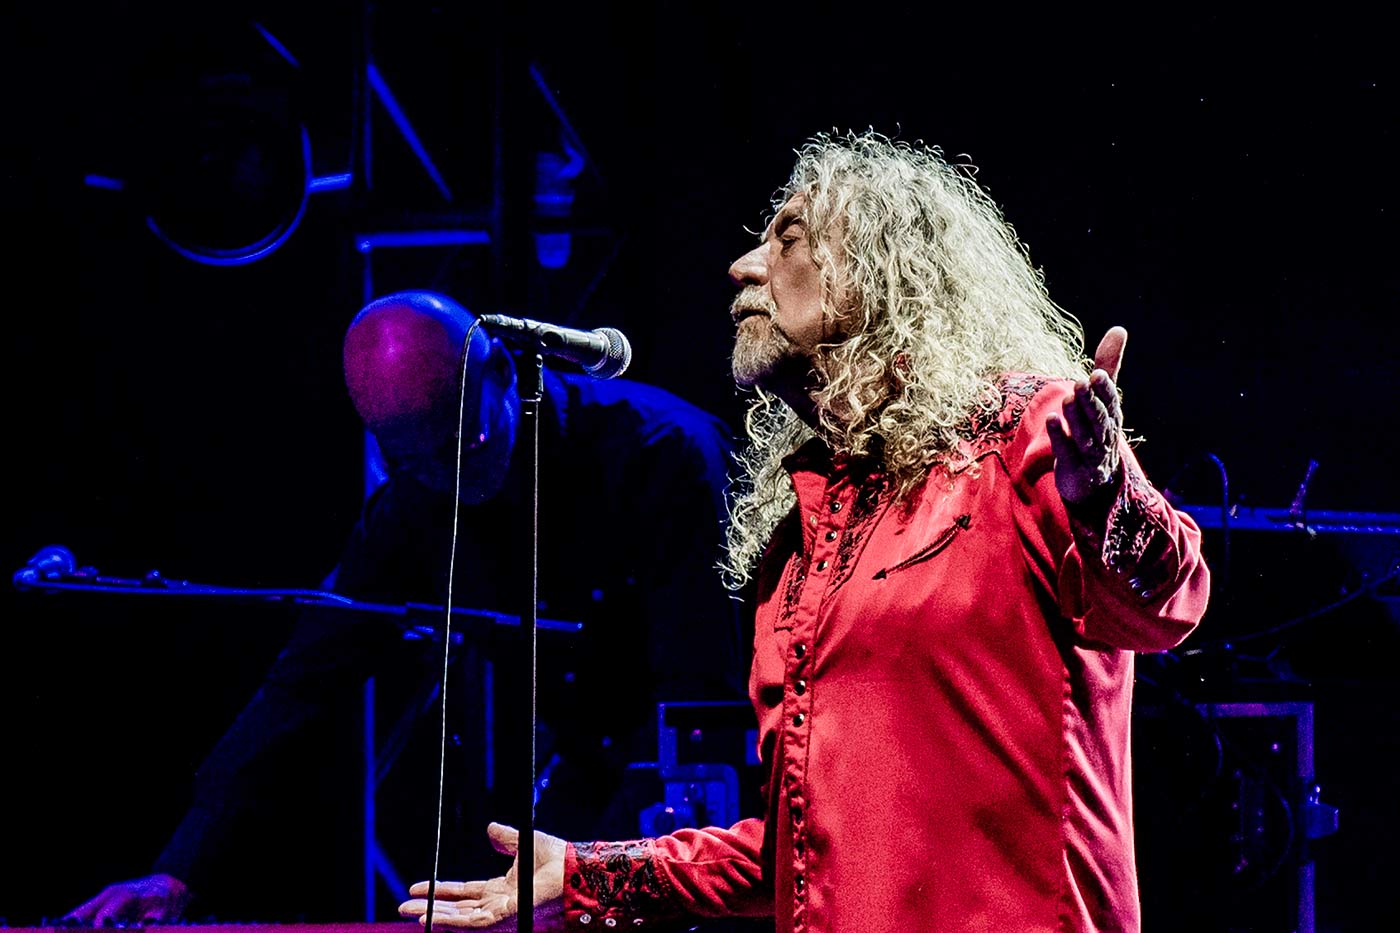 Robert Plant canta “Stairway To Heaven” por primera vez en dieciséis años